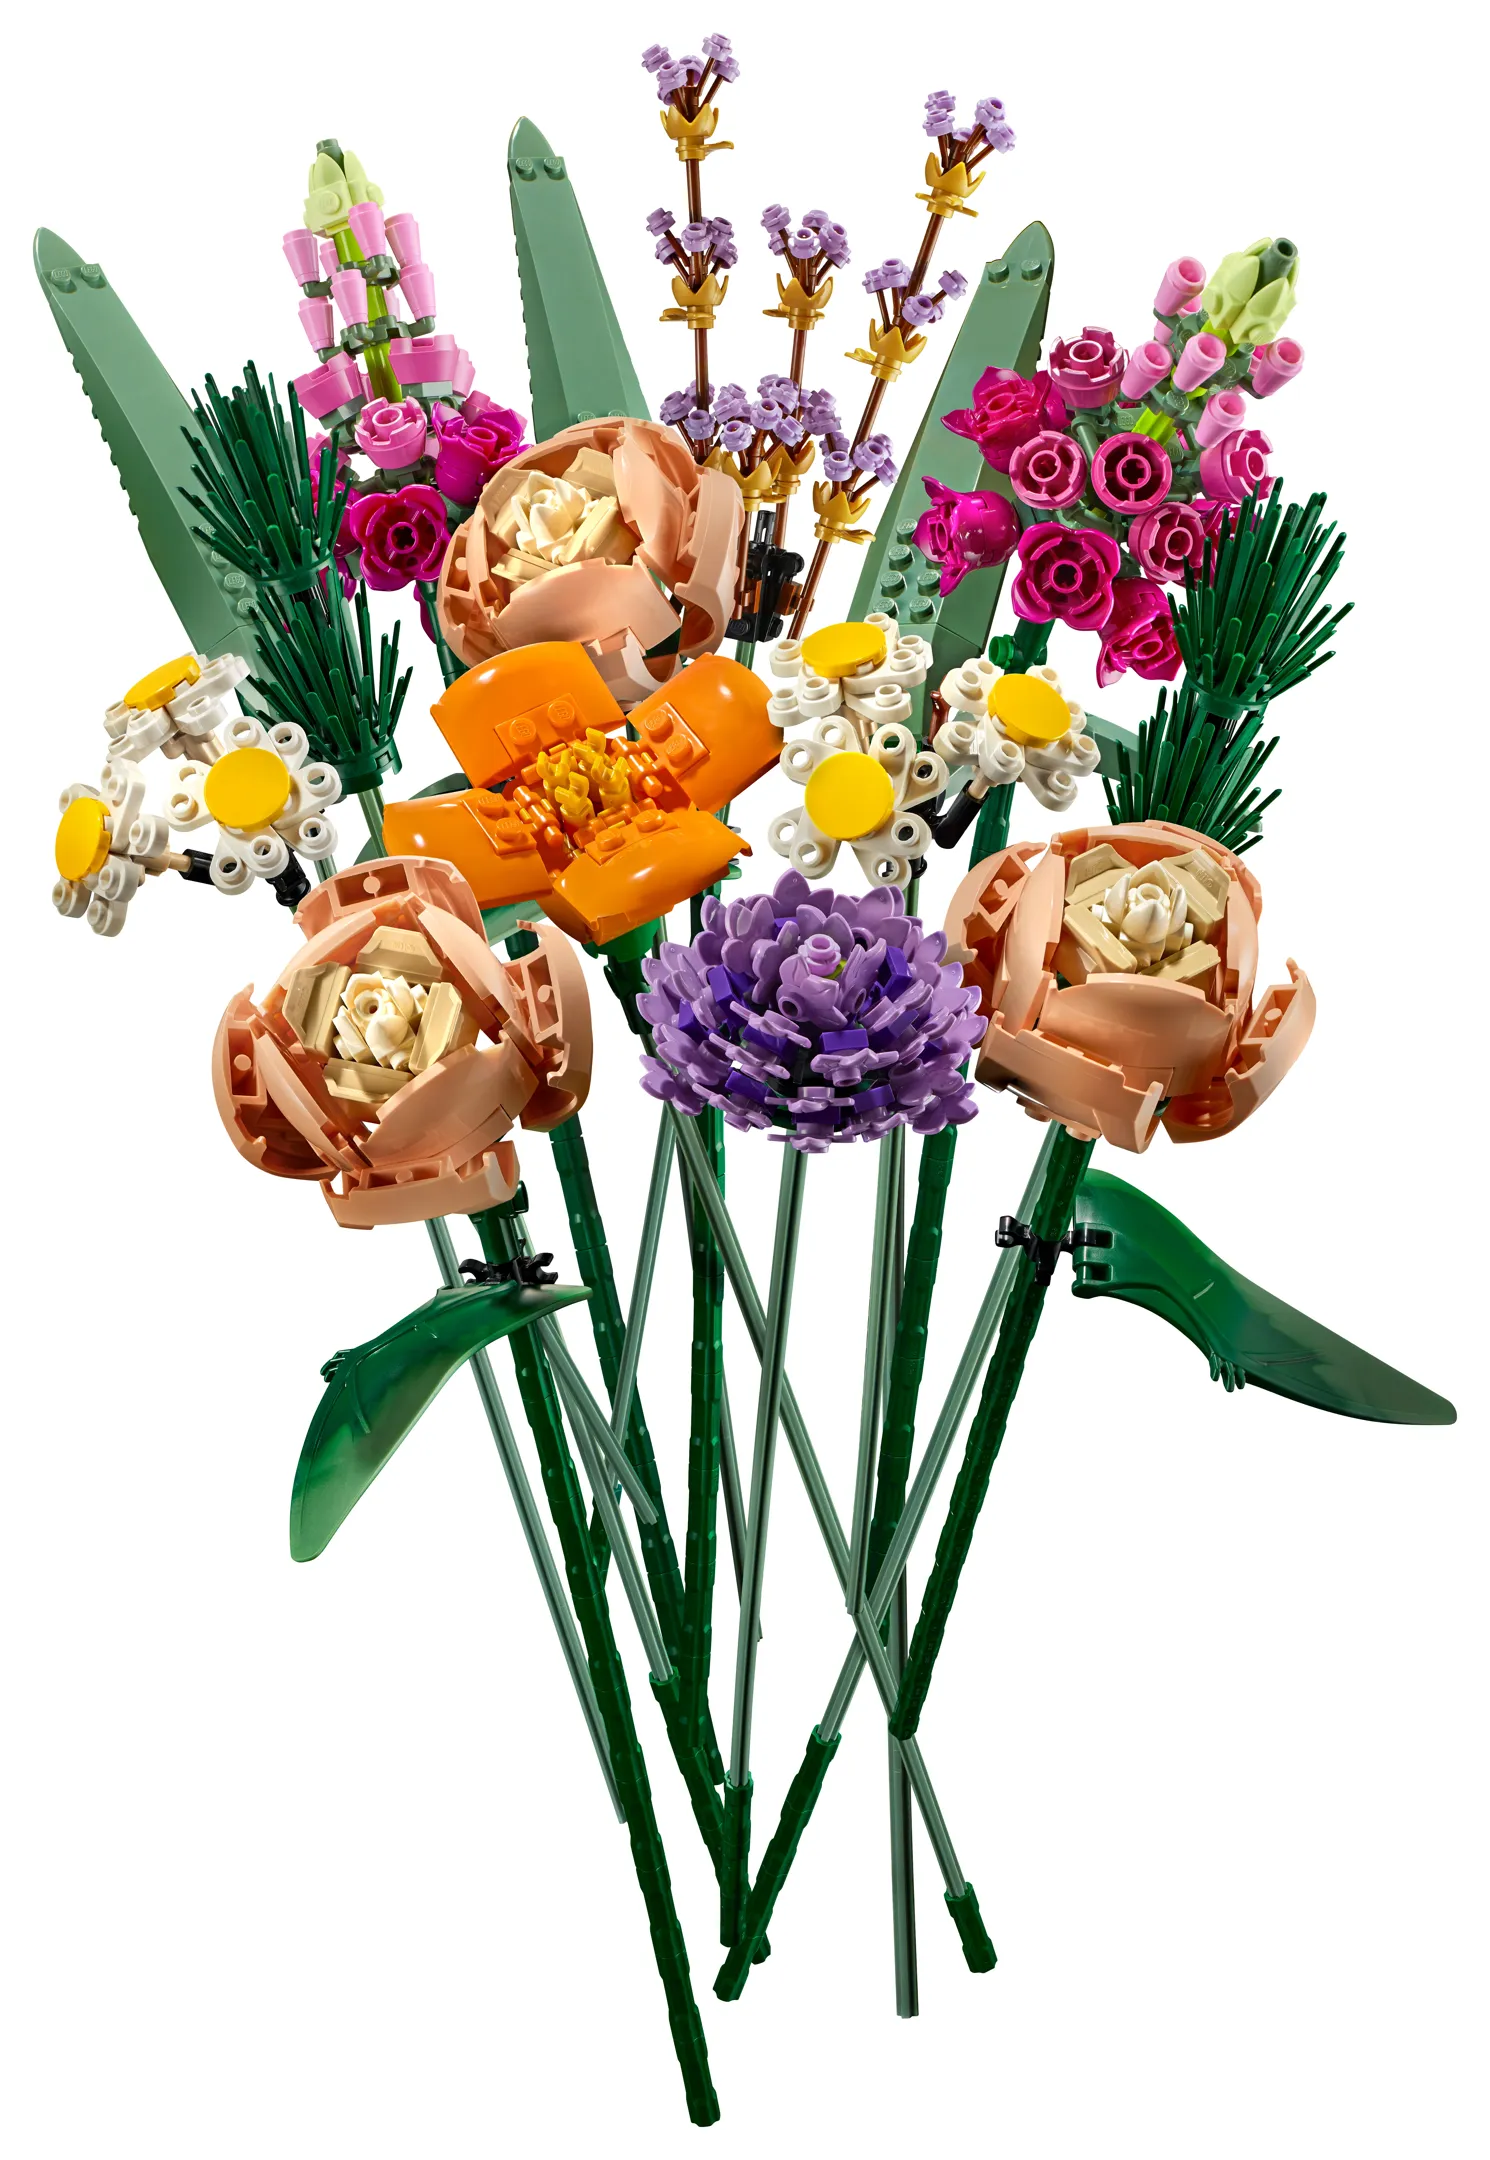 LEGO - Icons Blumenstrauß | Set 10280